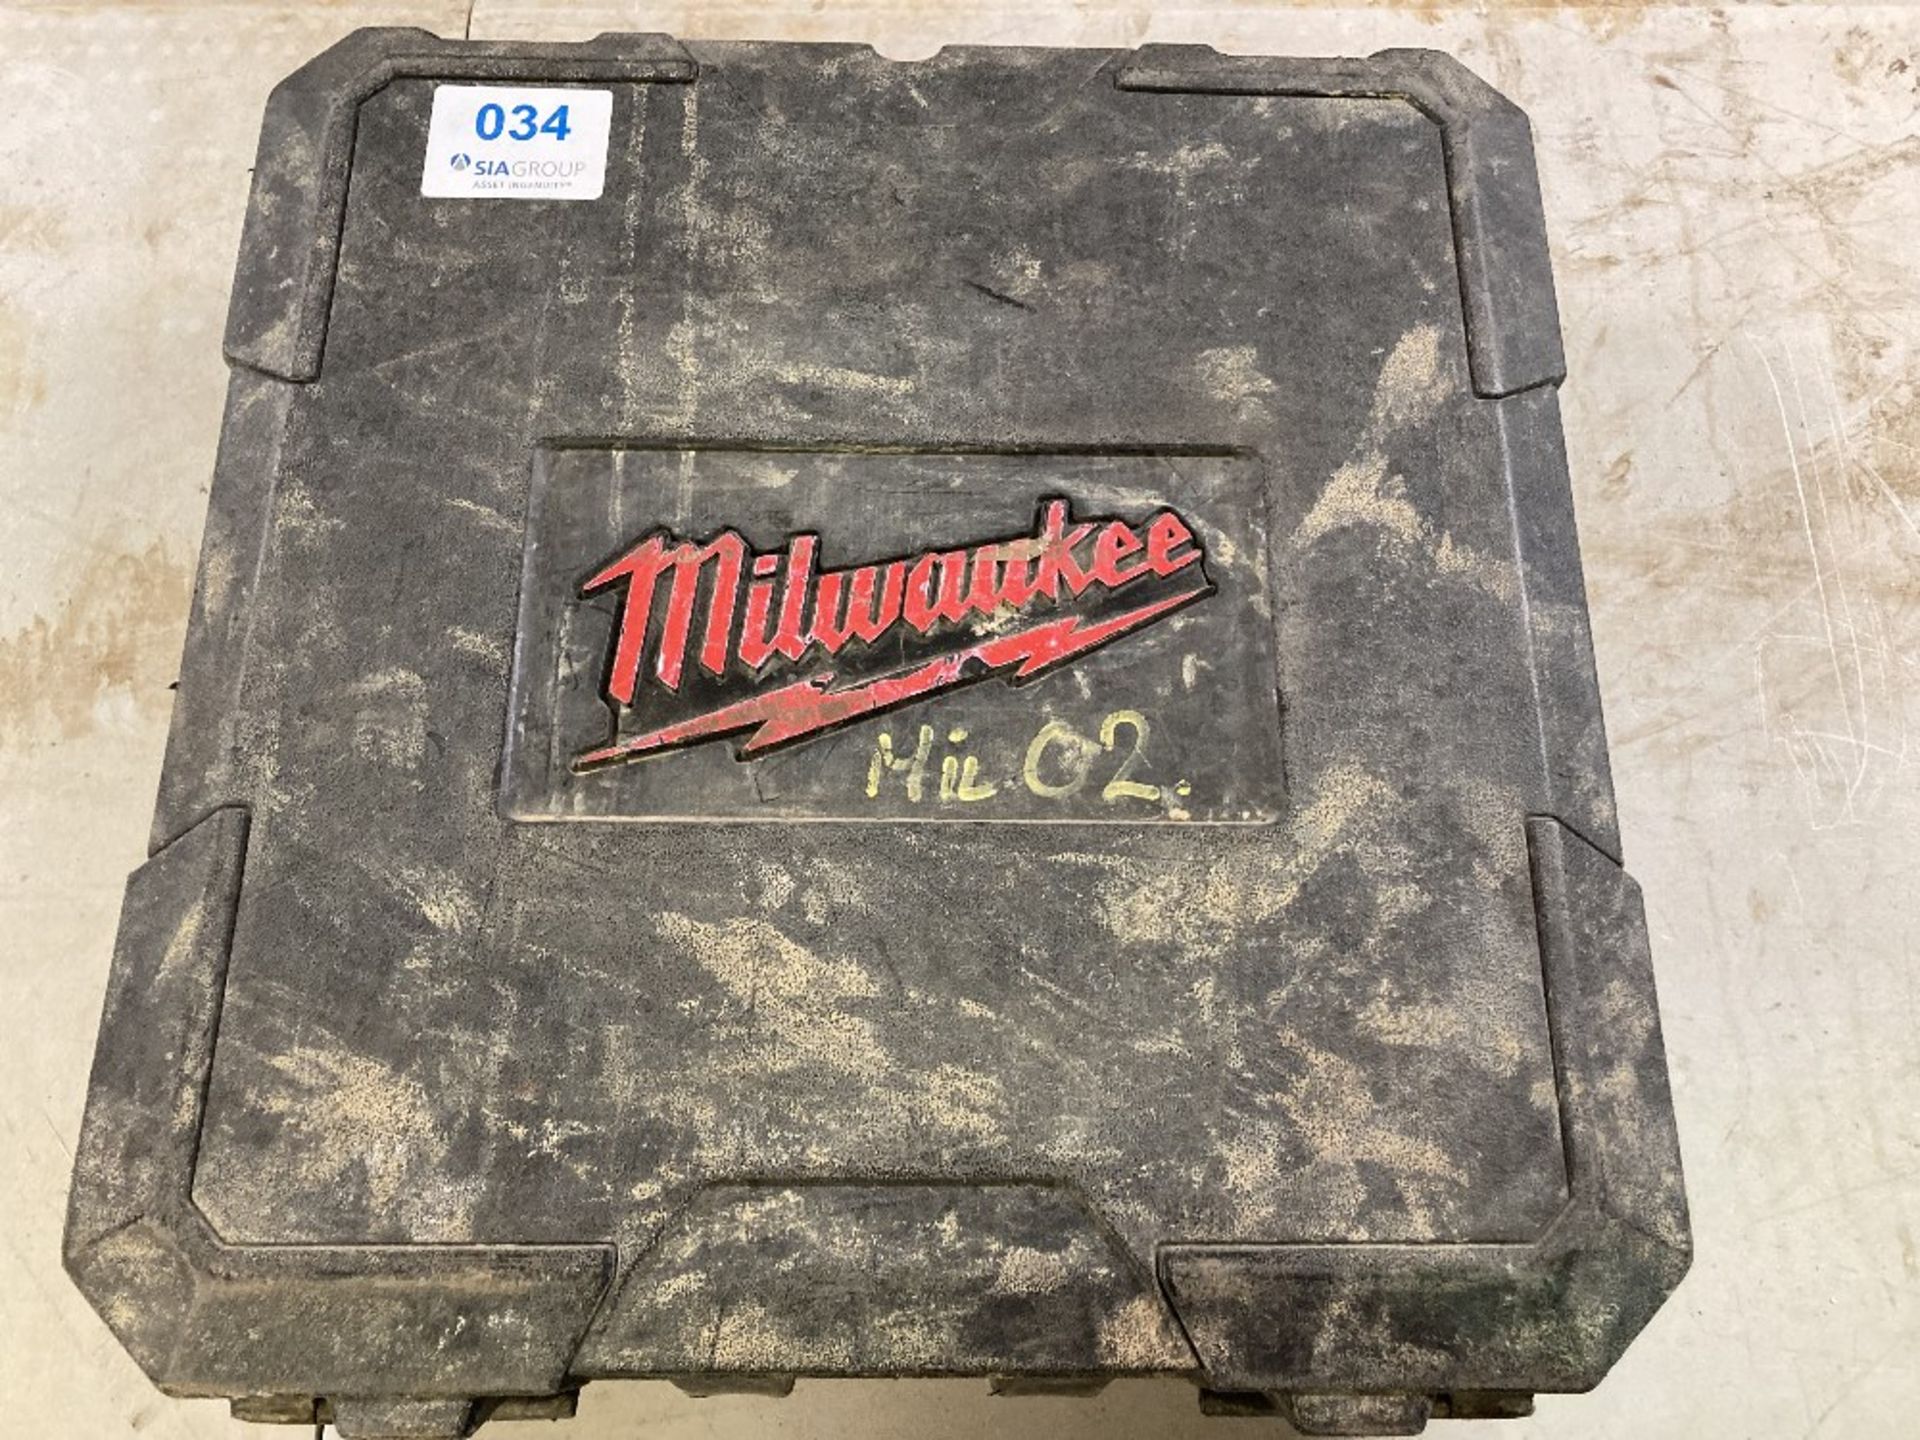 Milwaukee HD 18 BS Heavy Duty Metal Bandsaw - Image 4 of 4